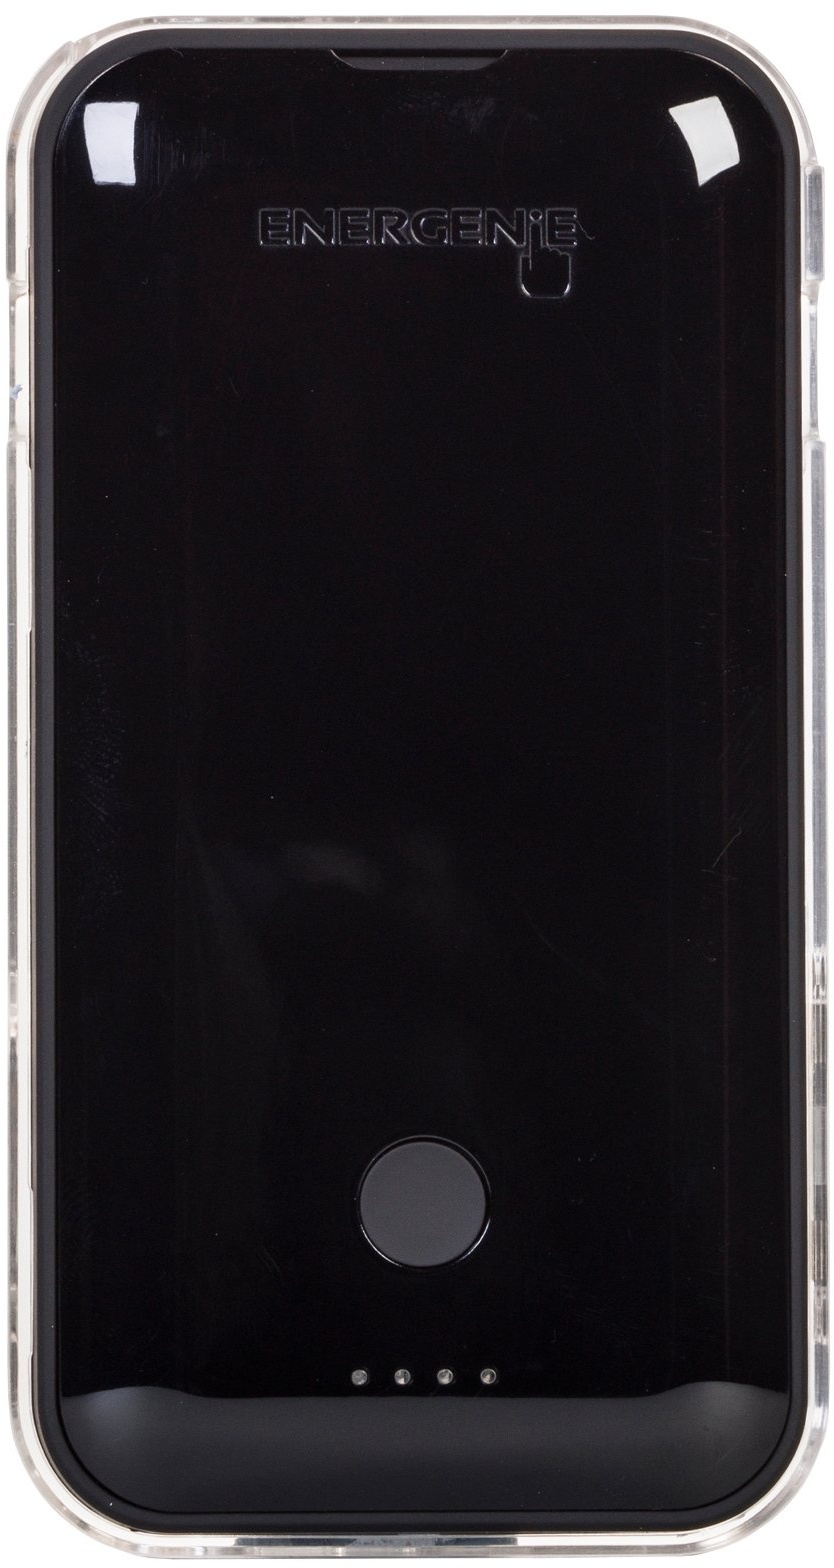 Energenie ChargeGenie 2800mAh MFI Lightning Gel Pad Tragbares Drahtloses Ladegerät Externer Akku Powerbank Kompatibel mit Apple iPhone 5/5C/5S/SE/6/6 Plus/6s/6s Plus, iPad Mini/Pro, und iPod Touch 5. Generation und später - Schwarz